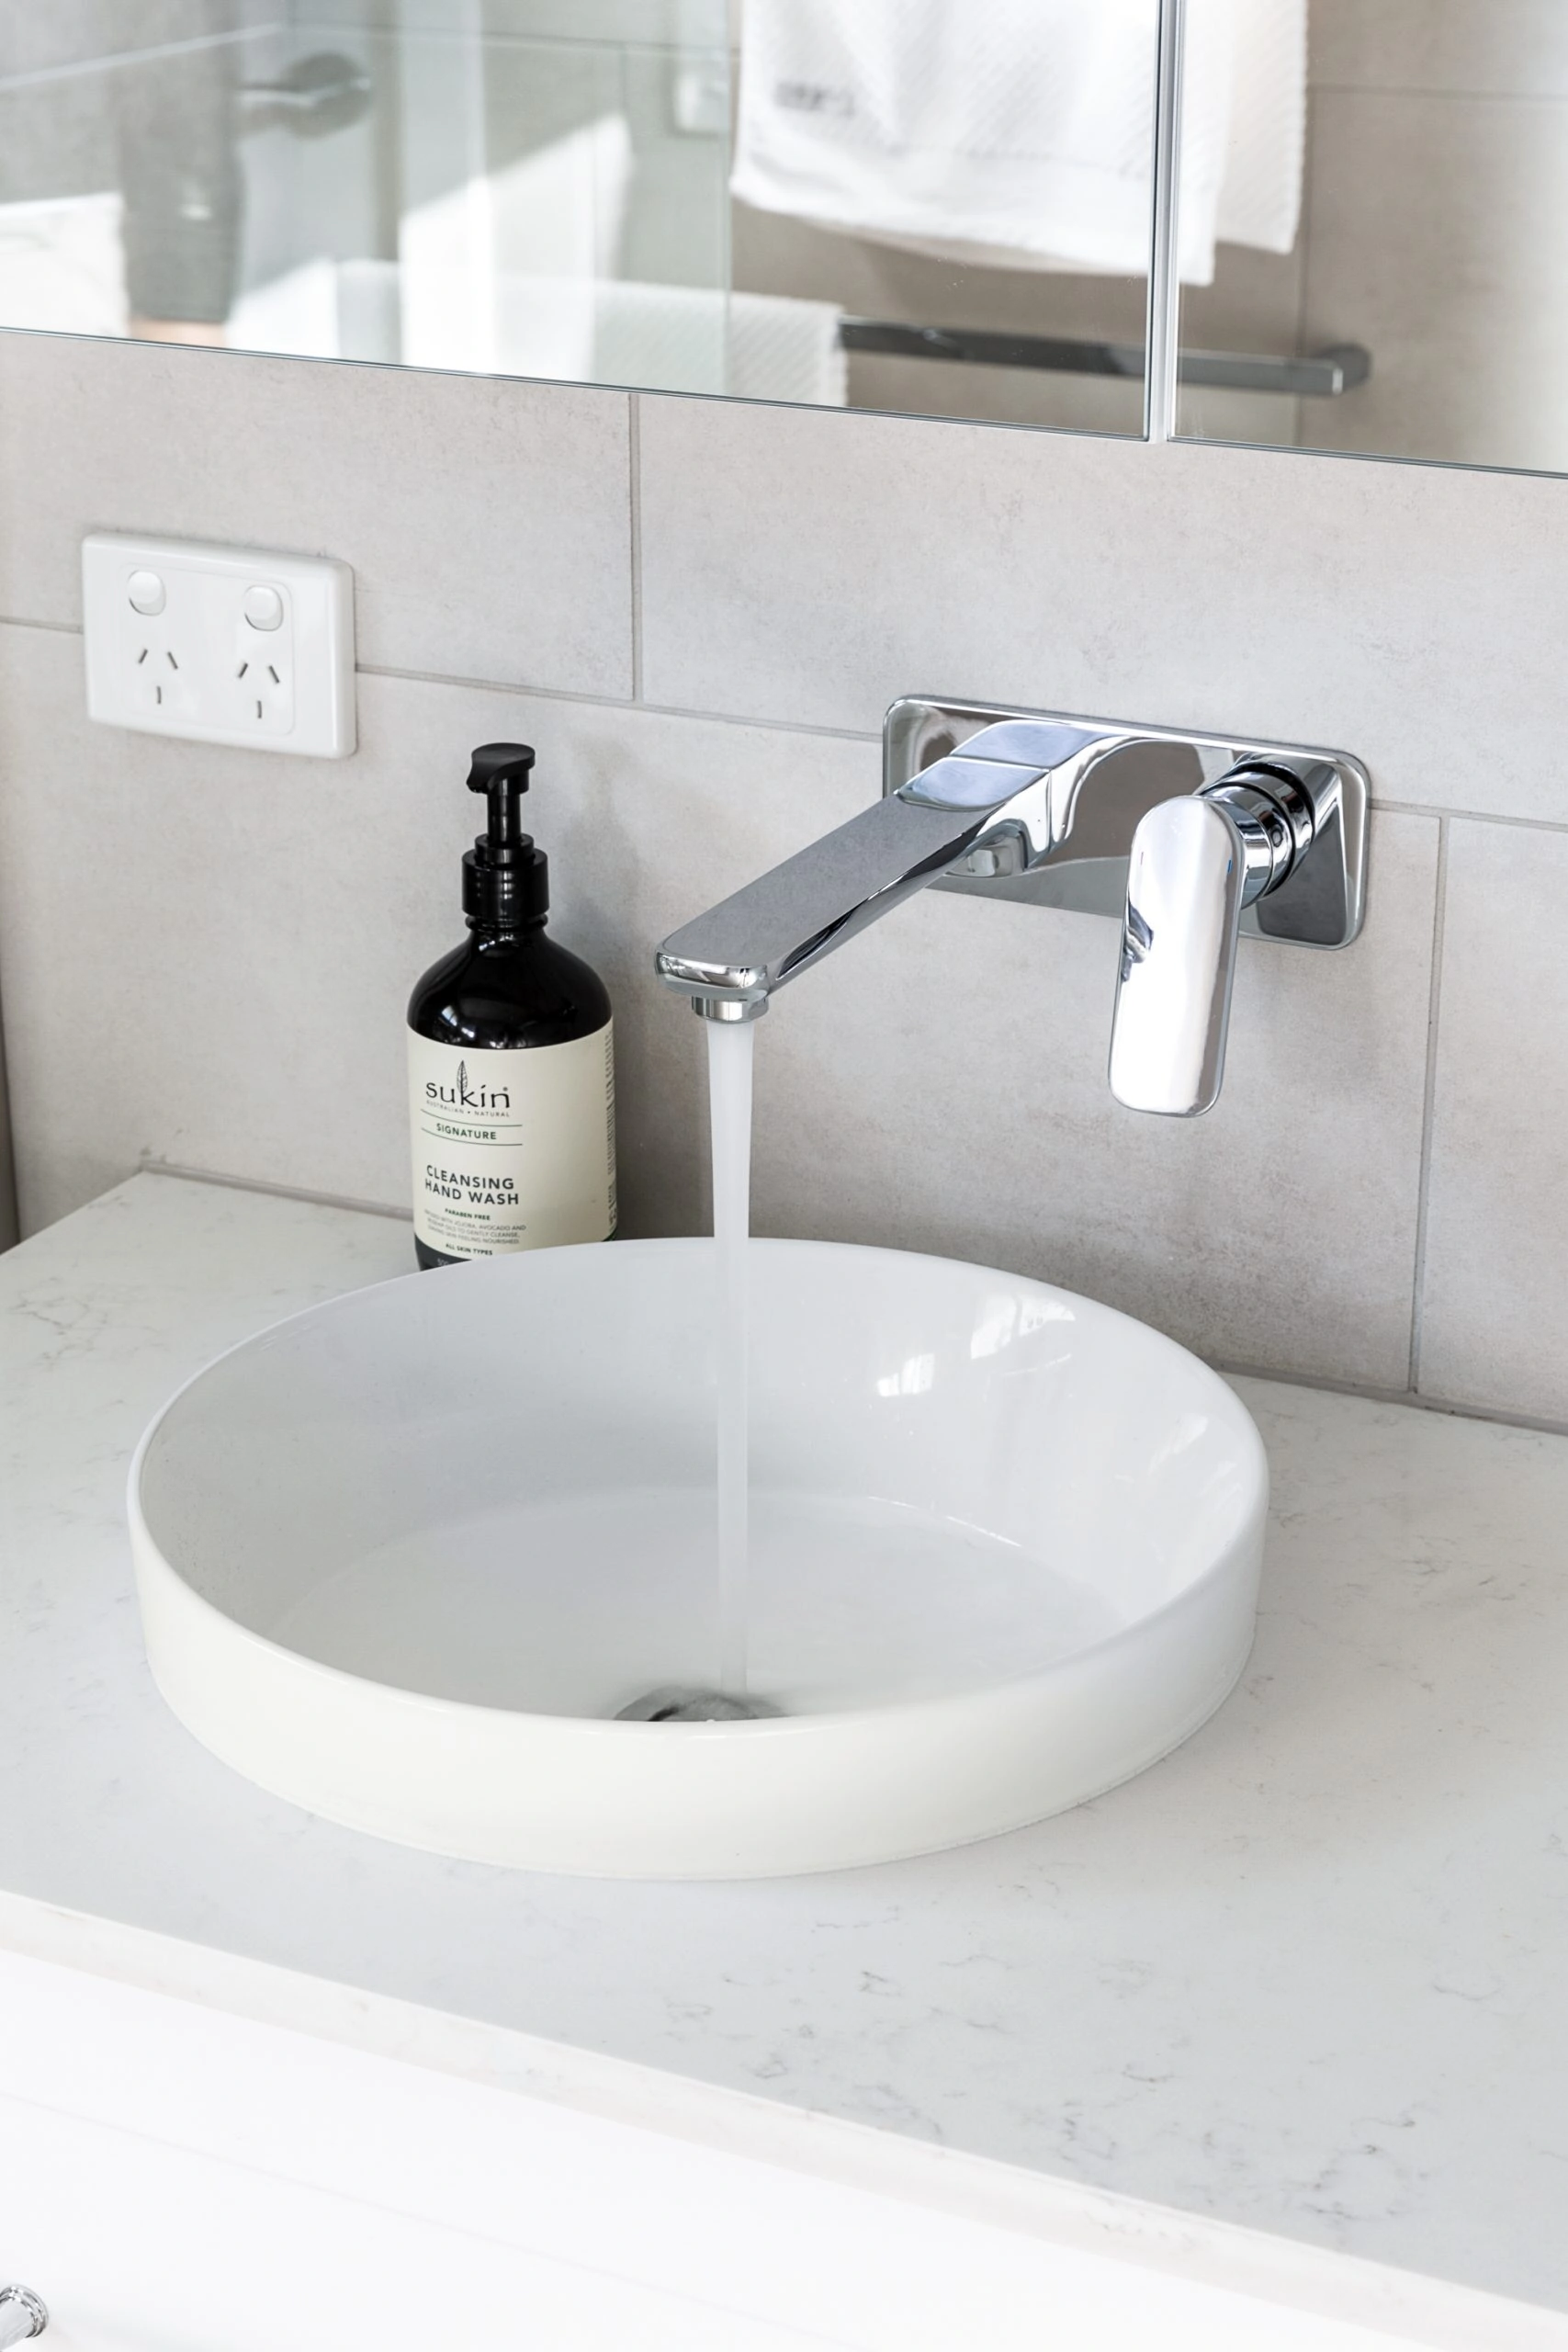 Chrome tap over a white bathroom sink